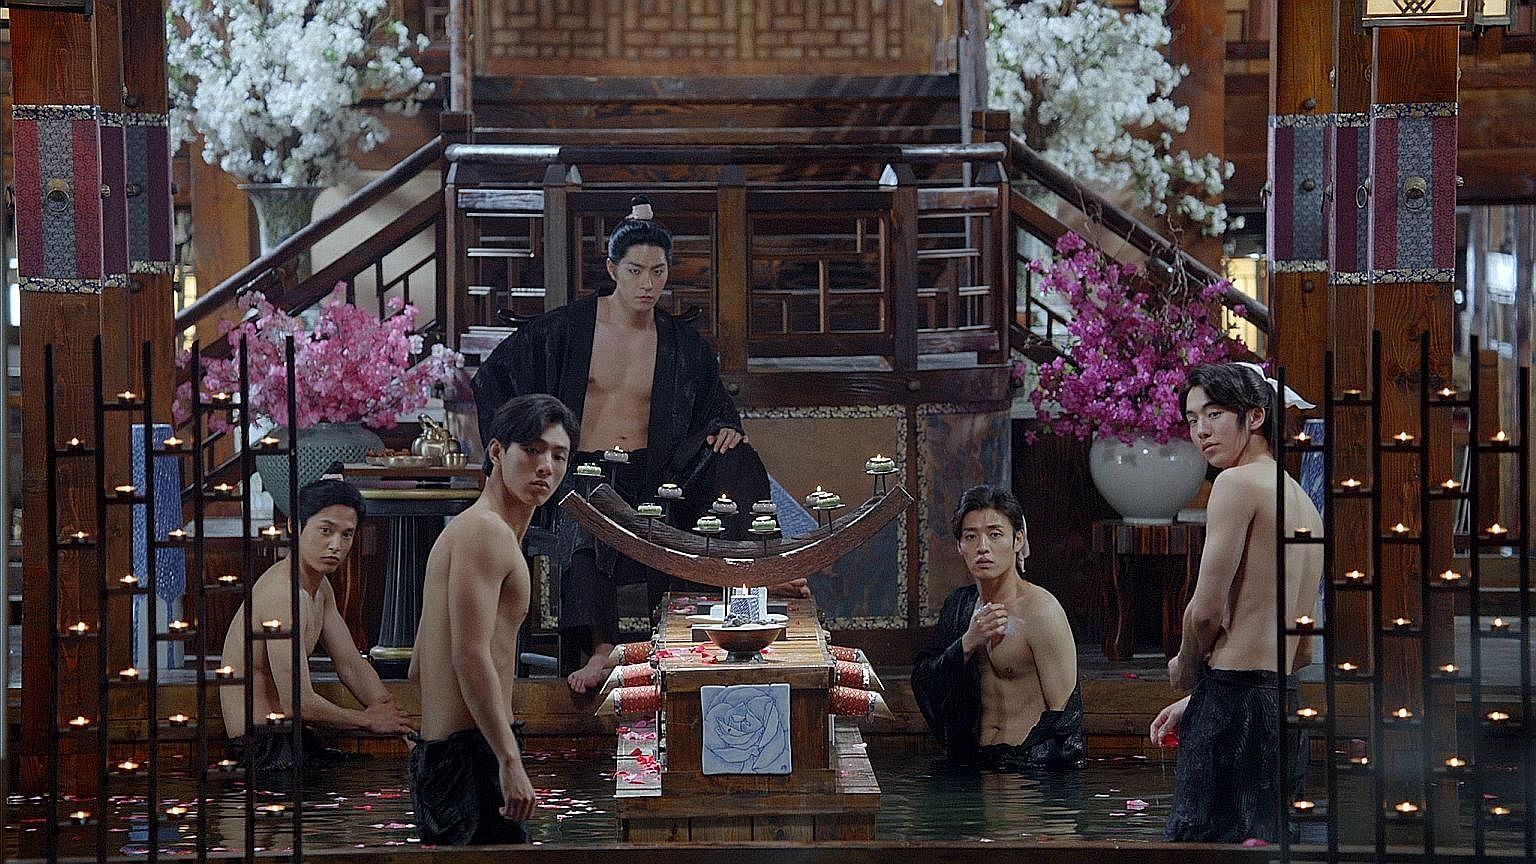 Eye candy galore in the Korean version of Scarlet Heart, starring (above from far left) Yoon Sun Woo, Ji Soo, Hong Jong Hyun, Kang Ha Neul and Nam Joo Hyuk.